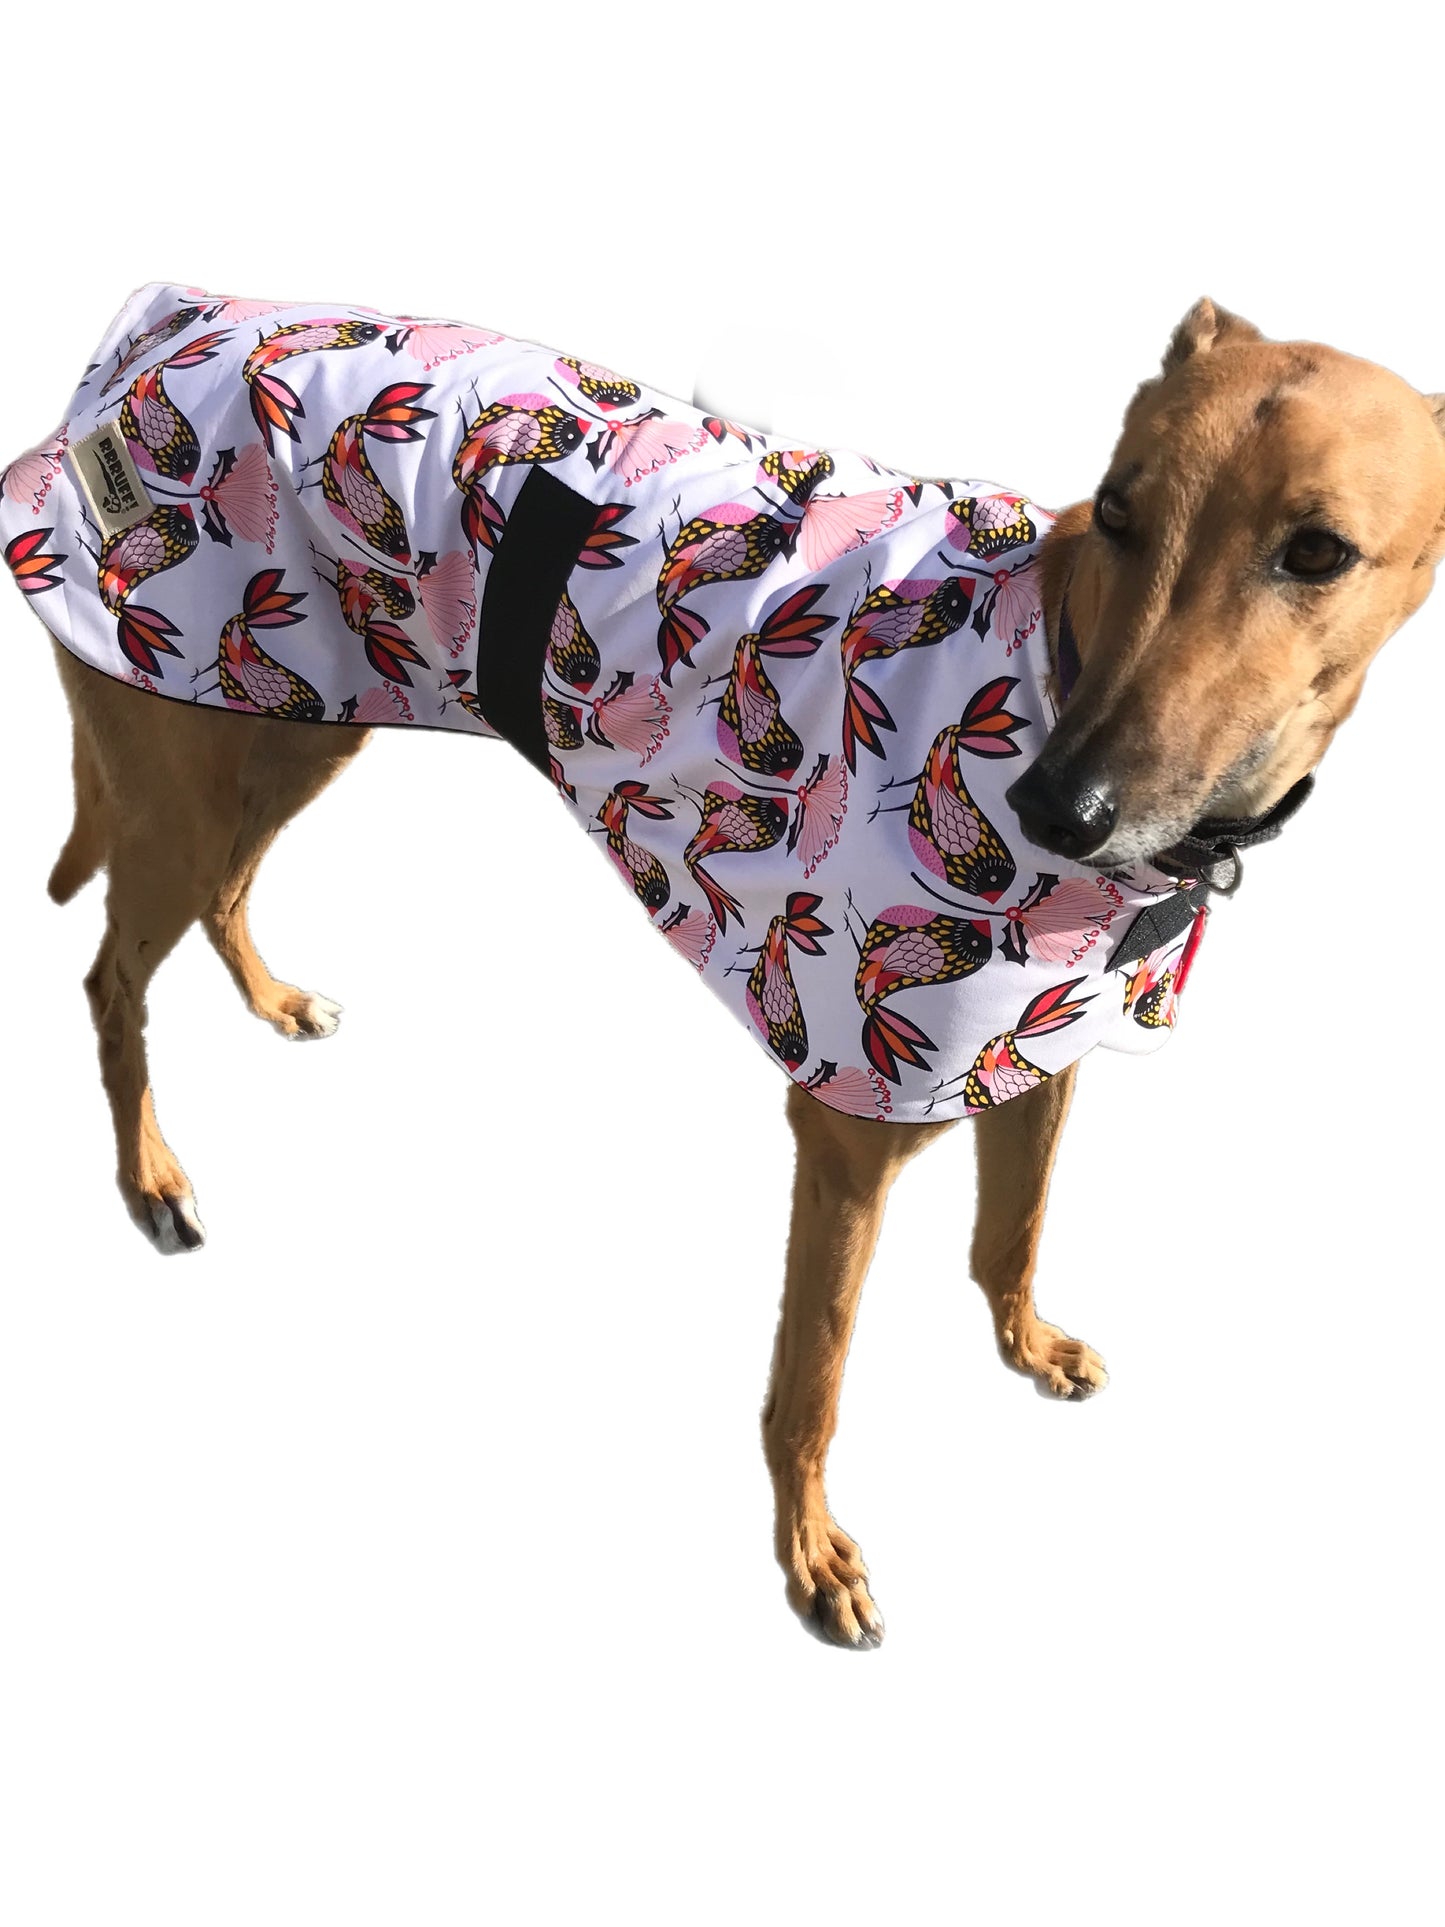 Spring range Greyhound coat in ‘birdy’ design cotton & fleece washable